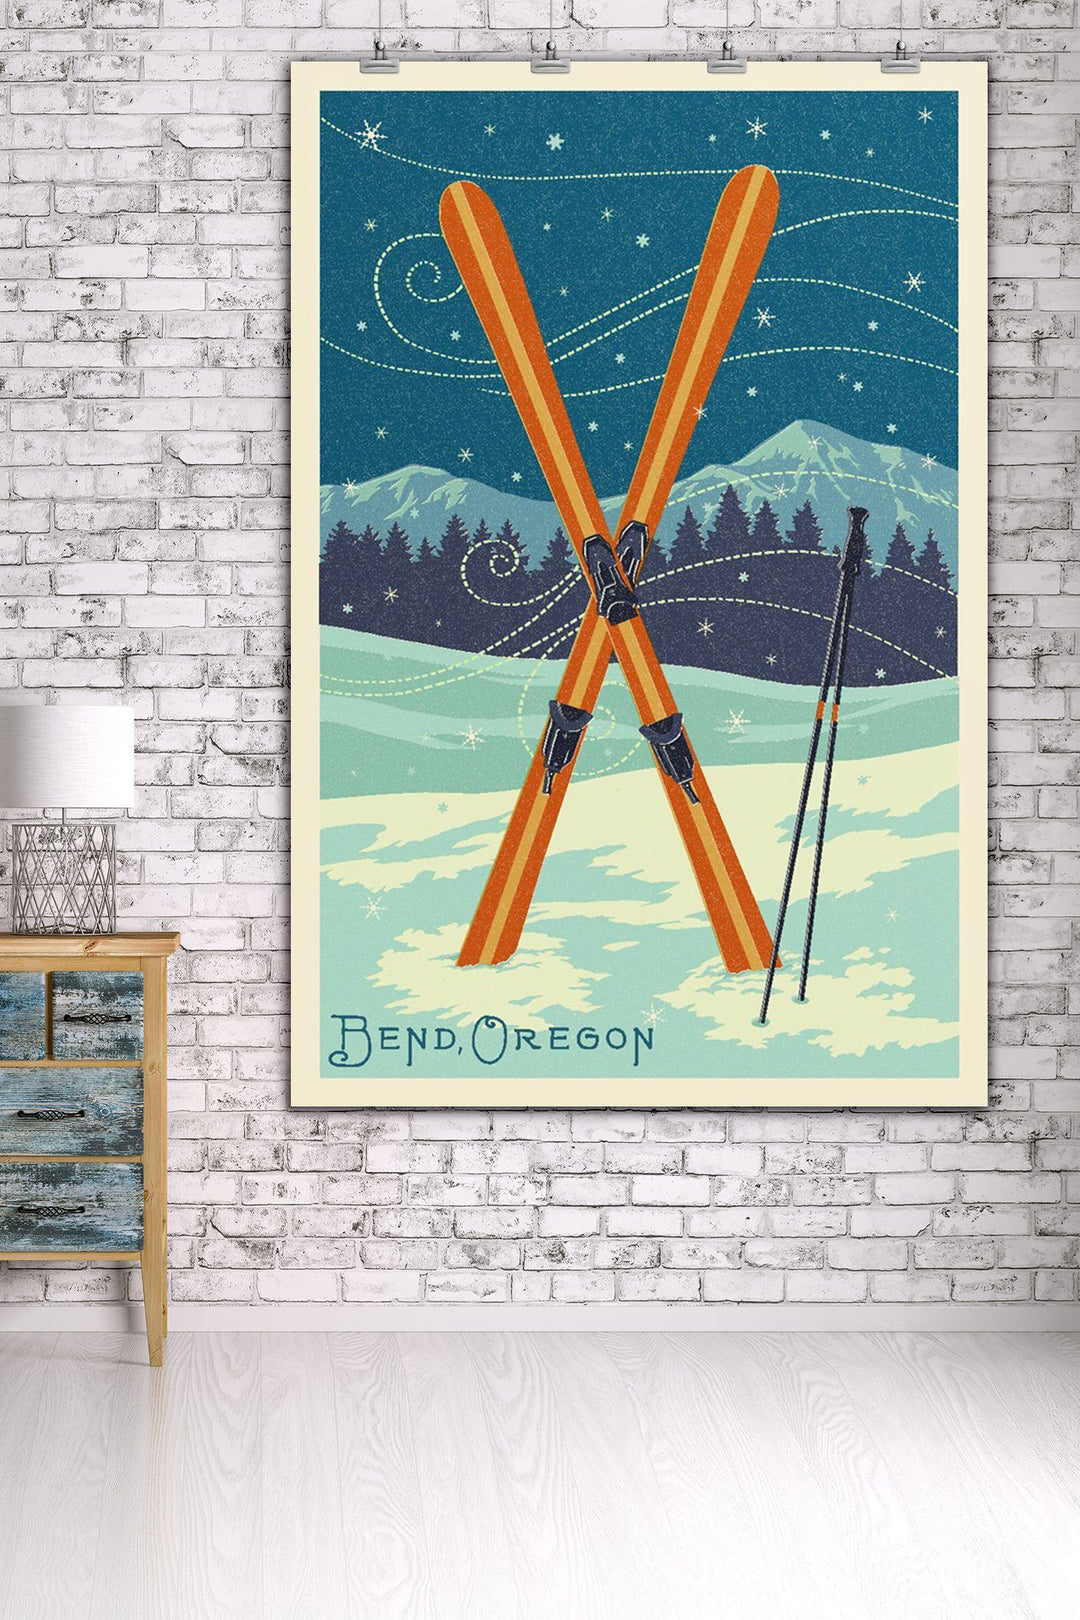 Bend, Oregon, Crossed Skis, Letterpress, Lantern Press Artwork, Art Prints and Metal Signs Art Lantern Press 